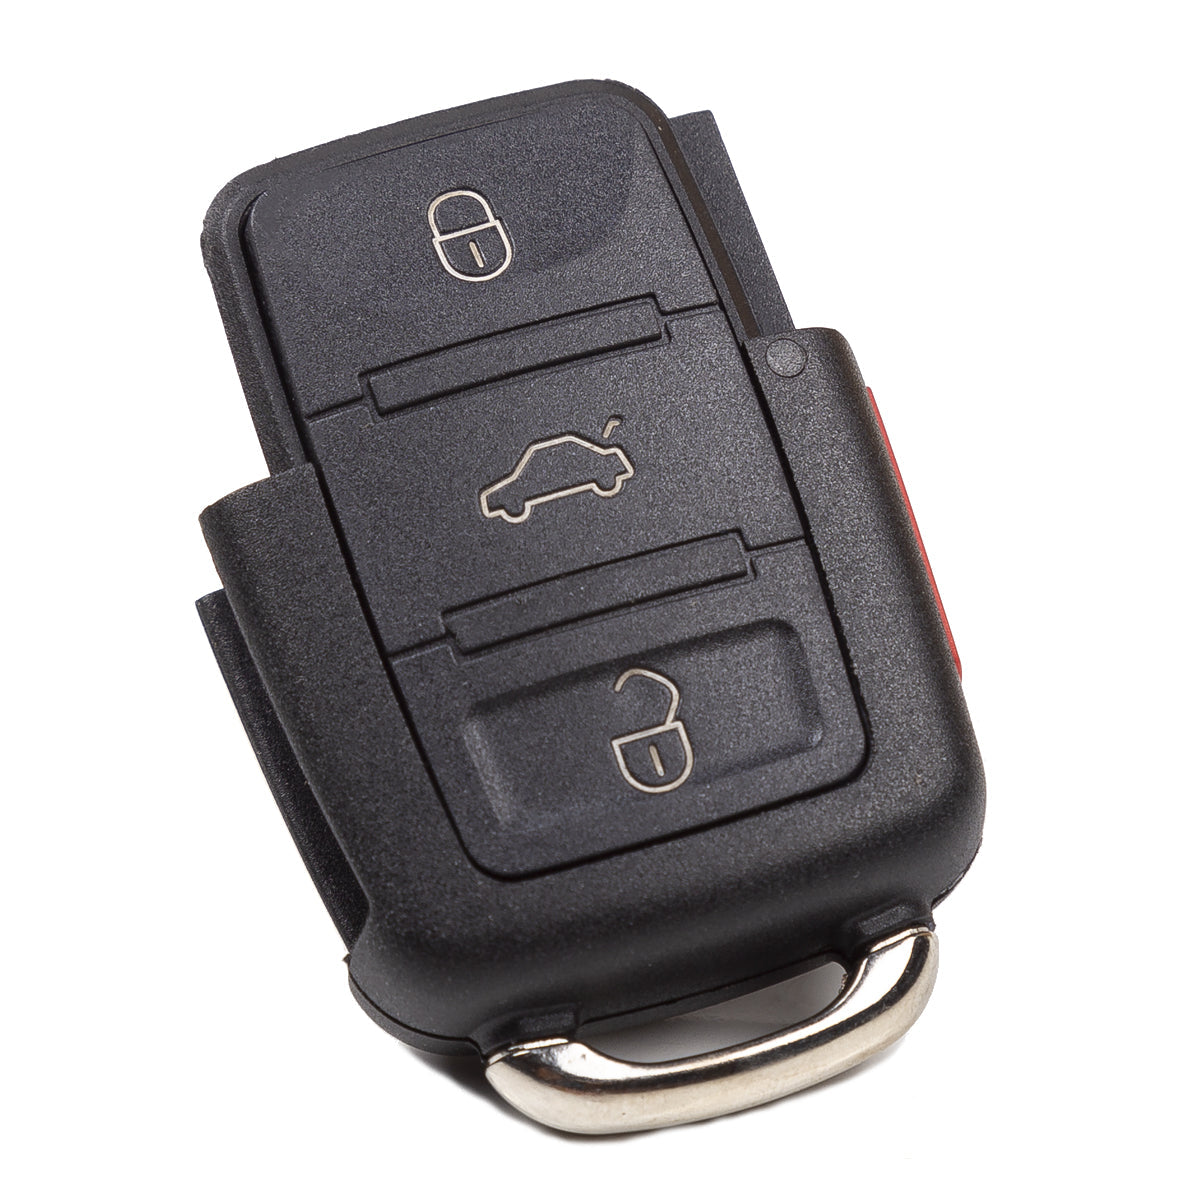 Flip Key Fob-Remote Part Compatible with Volkswagen 2006 2007 2008 2009 4B Part# 1K0959753H